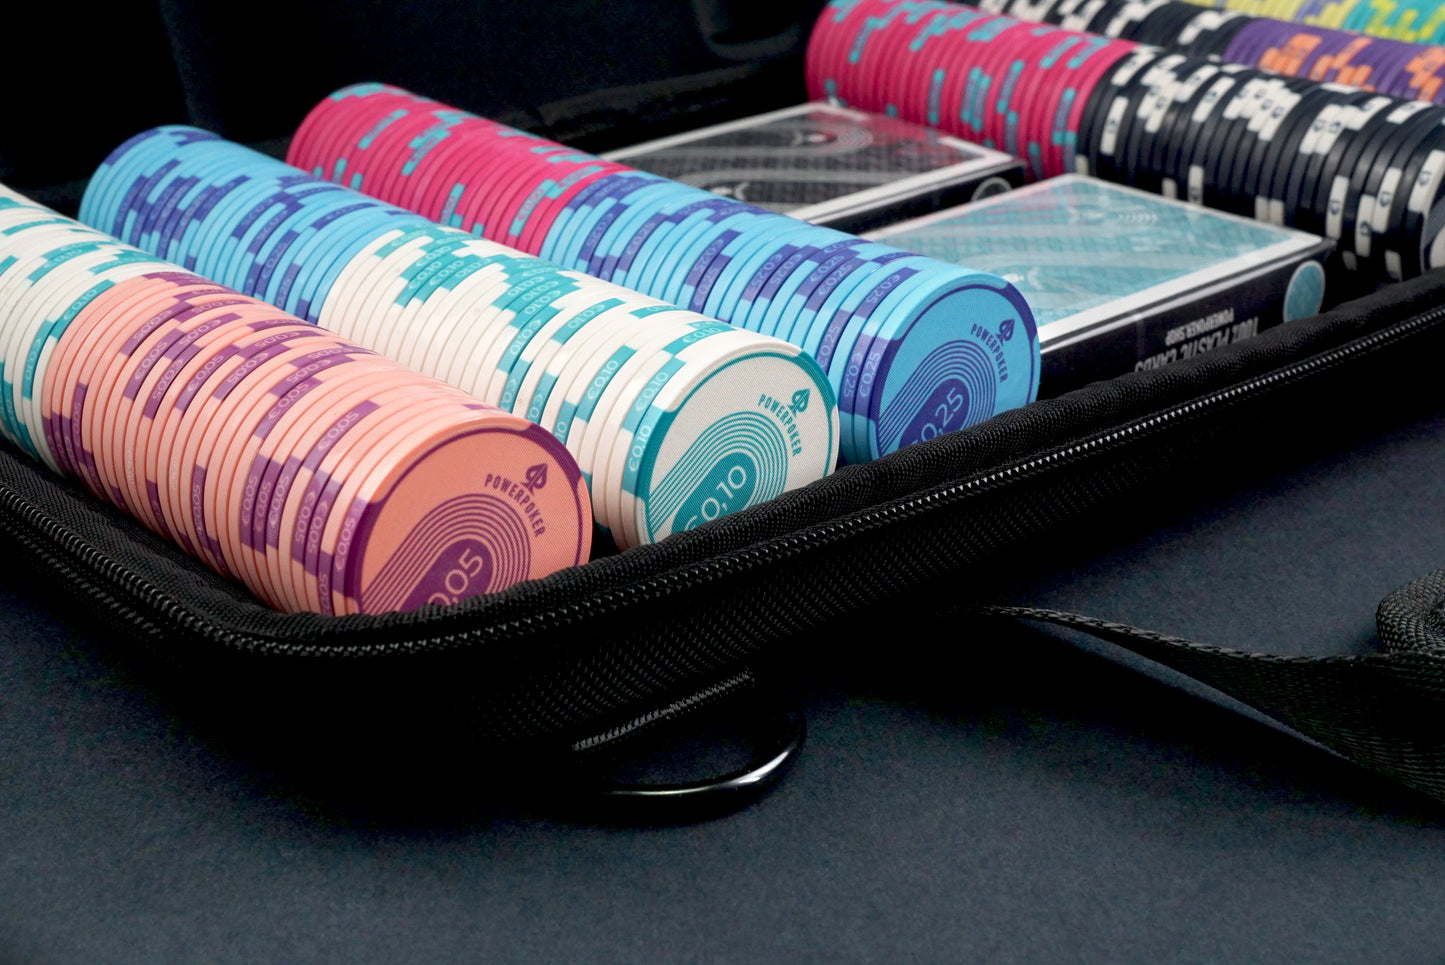 Poker case complete set - "Sports" CASH 300